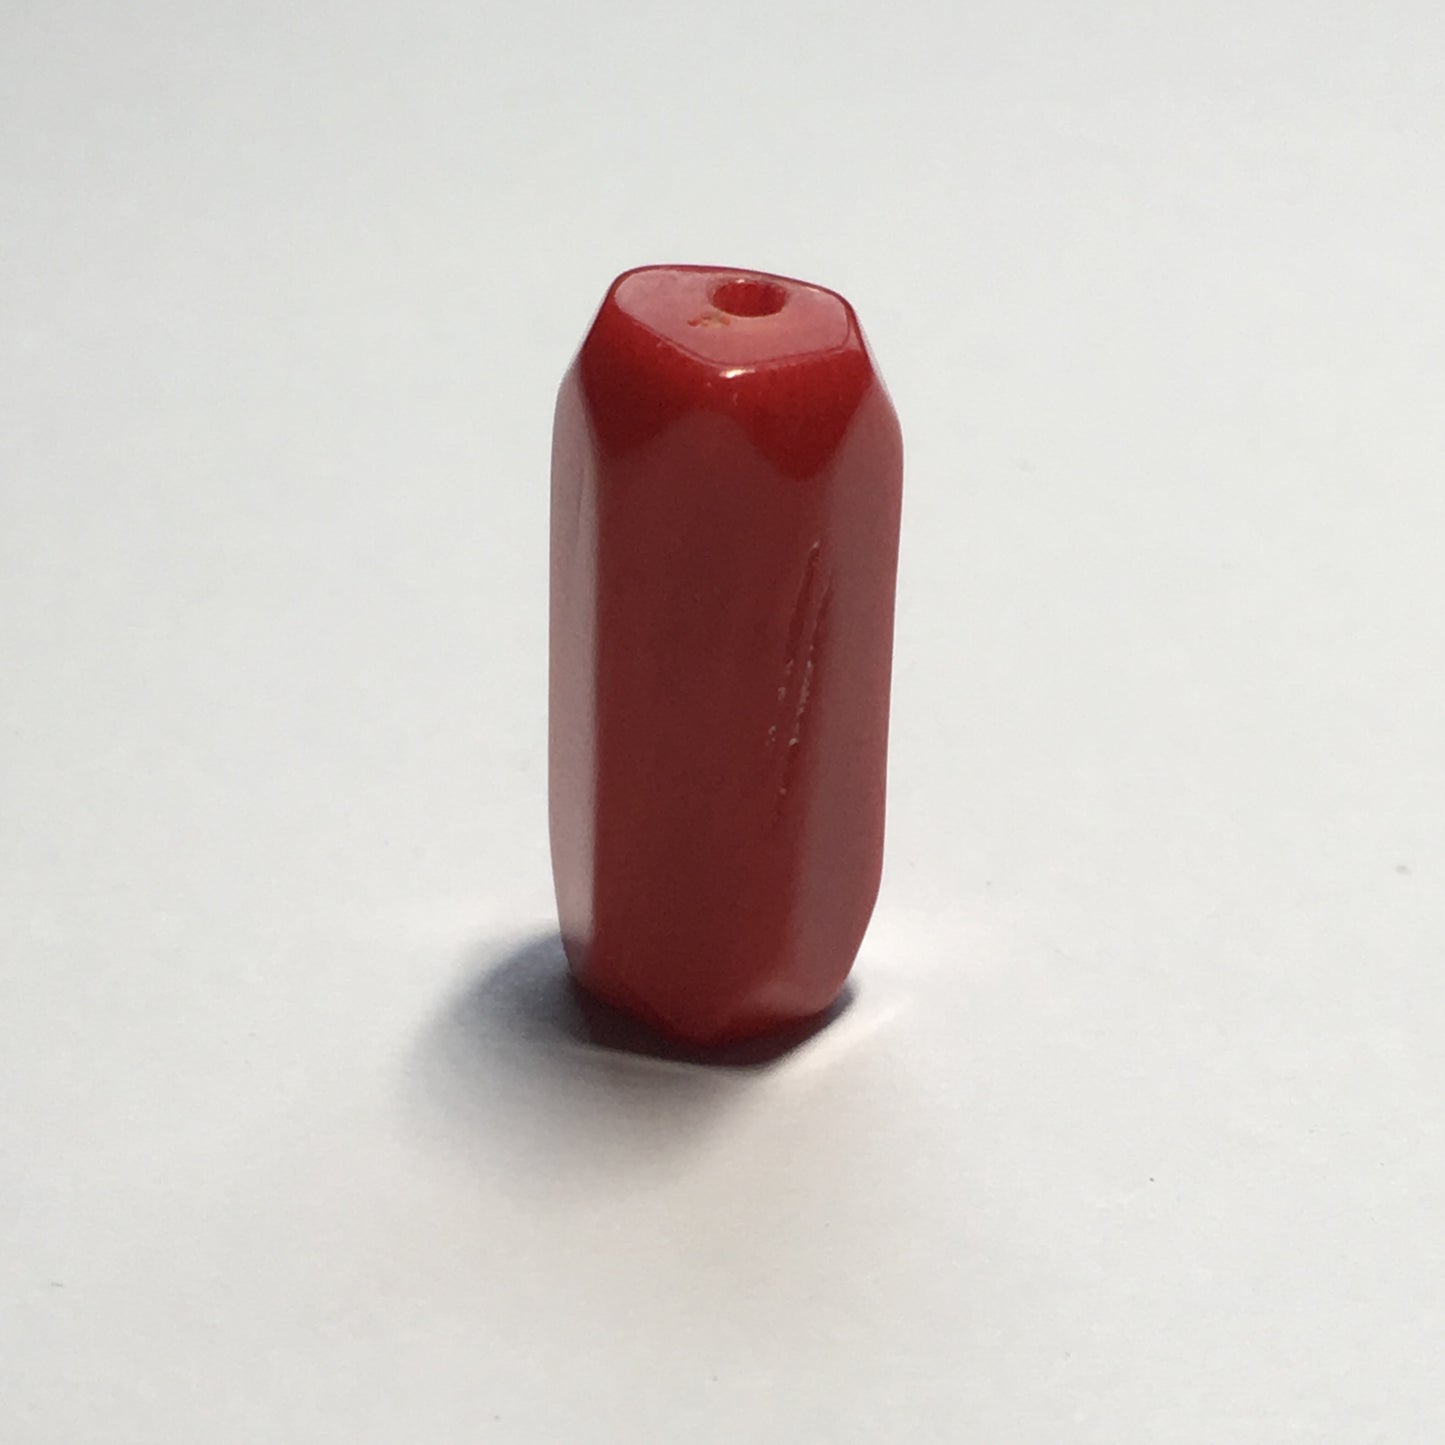 Red Jasper Semi-Precious Stone Polyhedron Focal Bead/Pendant, 24 x 10 mm